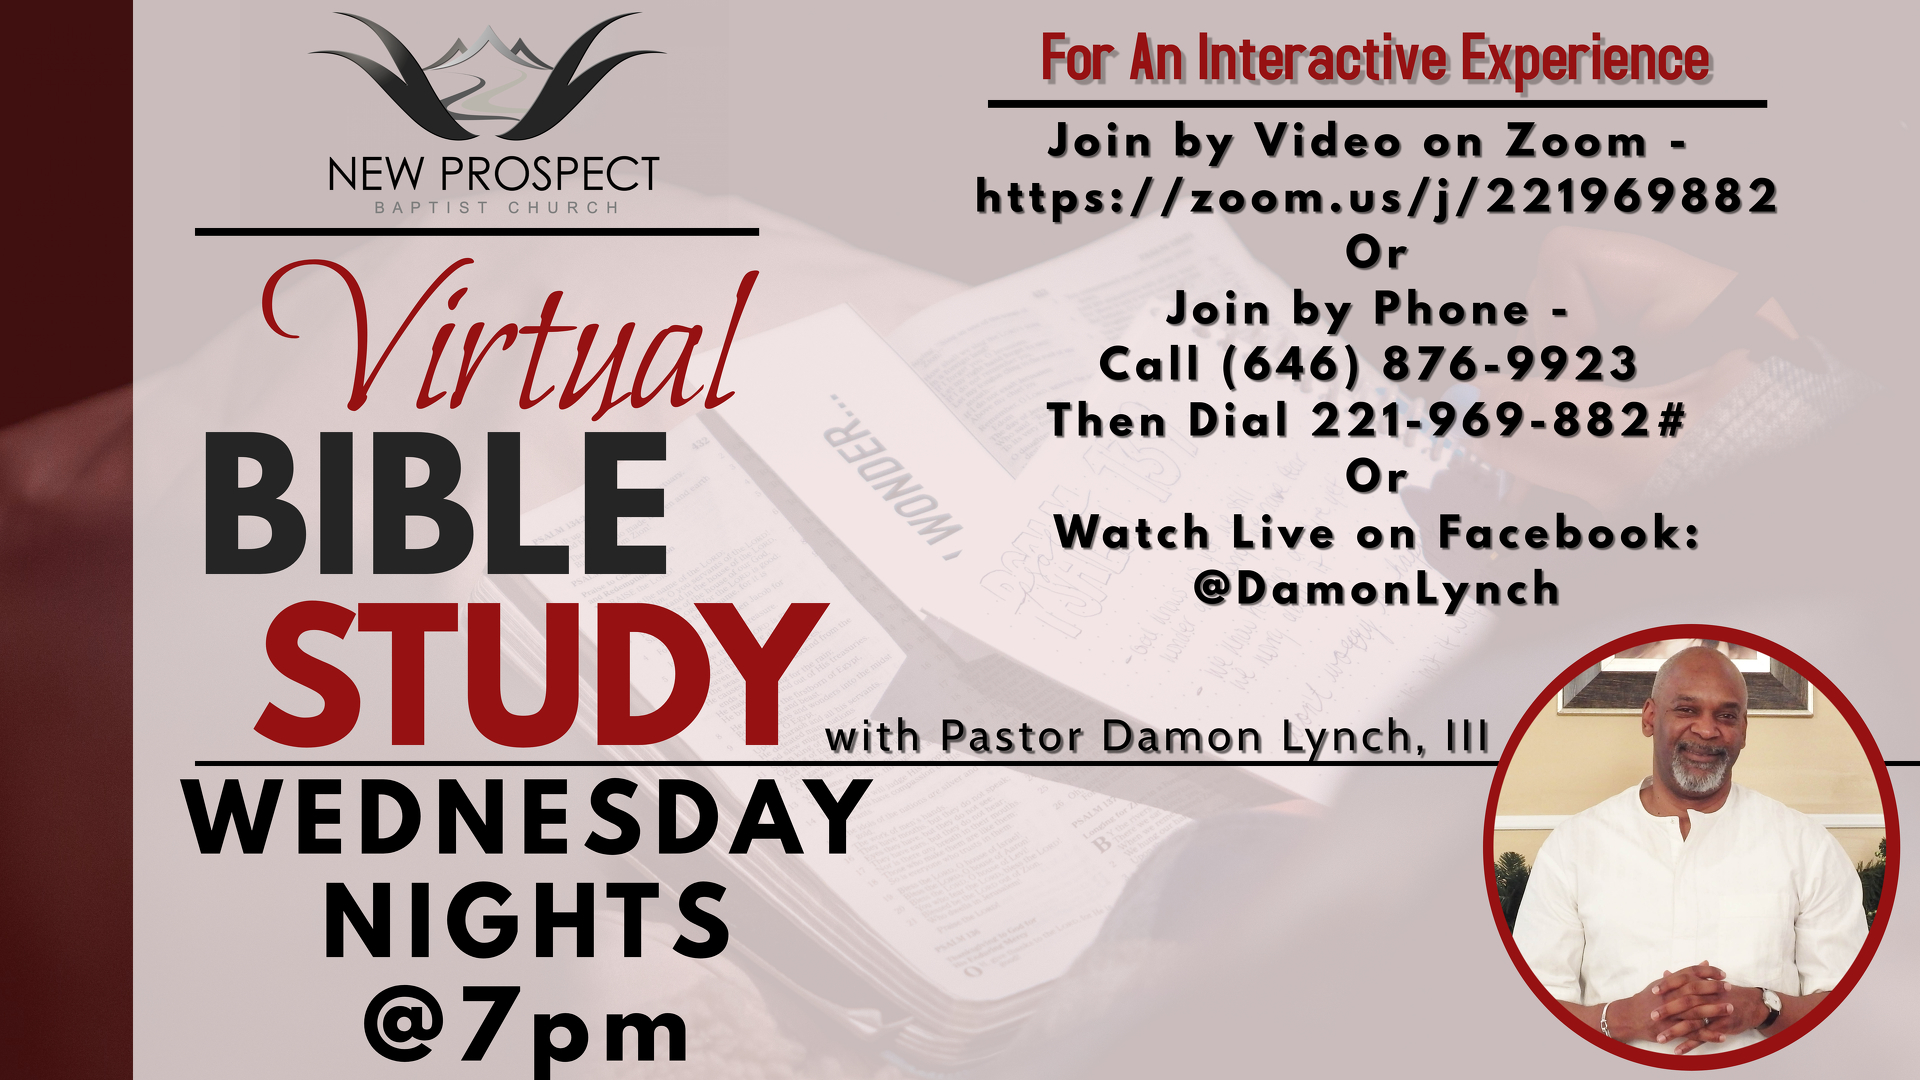 New Prospect Virtual Bible Study on Wednesdays at 7 p.m.